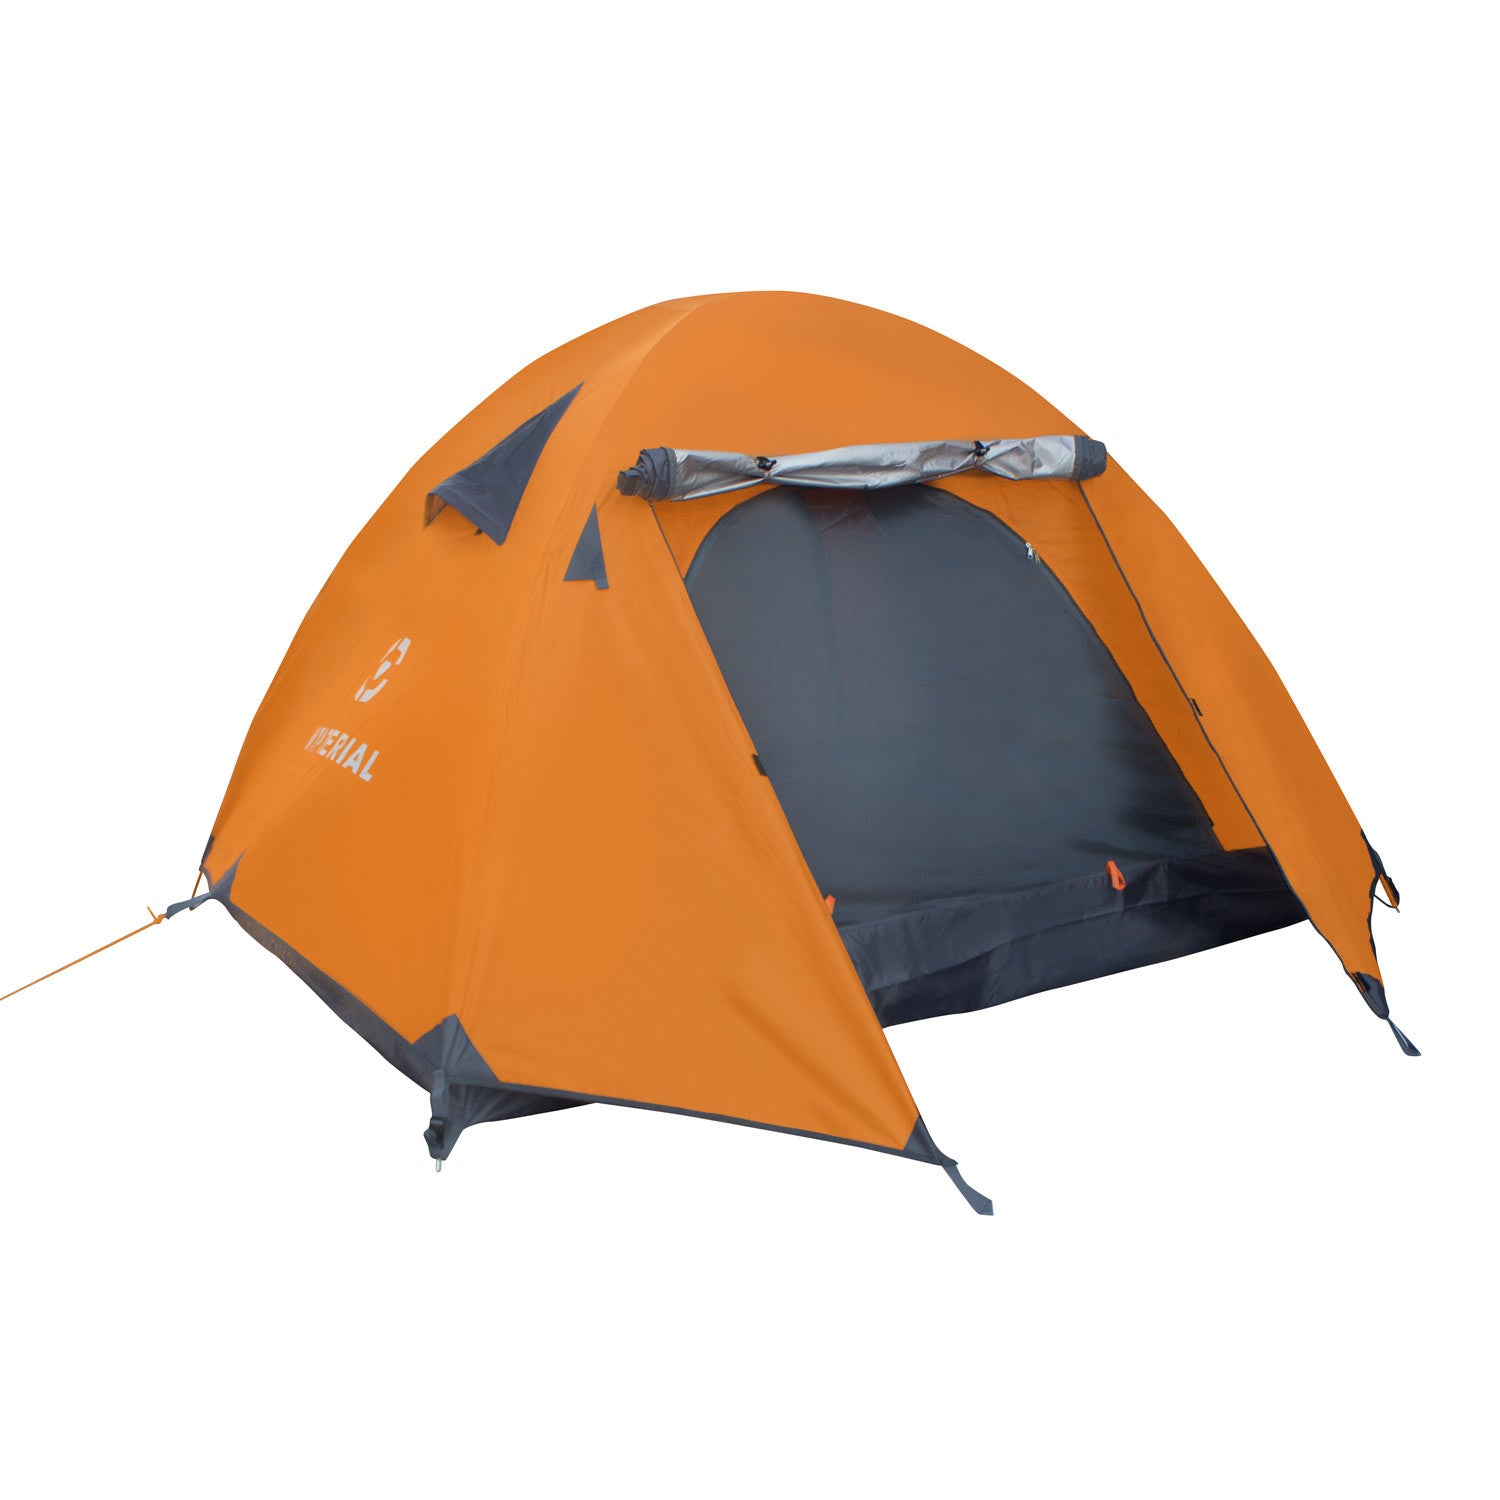 Палатка компакт. Best Camp палатки. Компактная палатка. Легкая компактная палатка. Палатки для кемпинга.